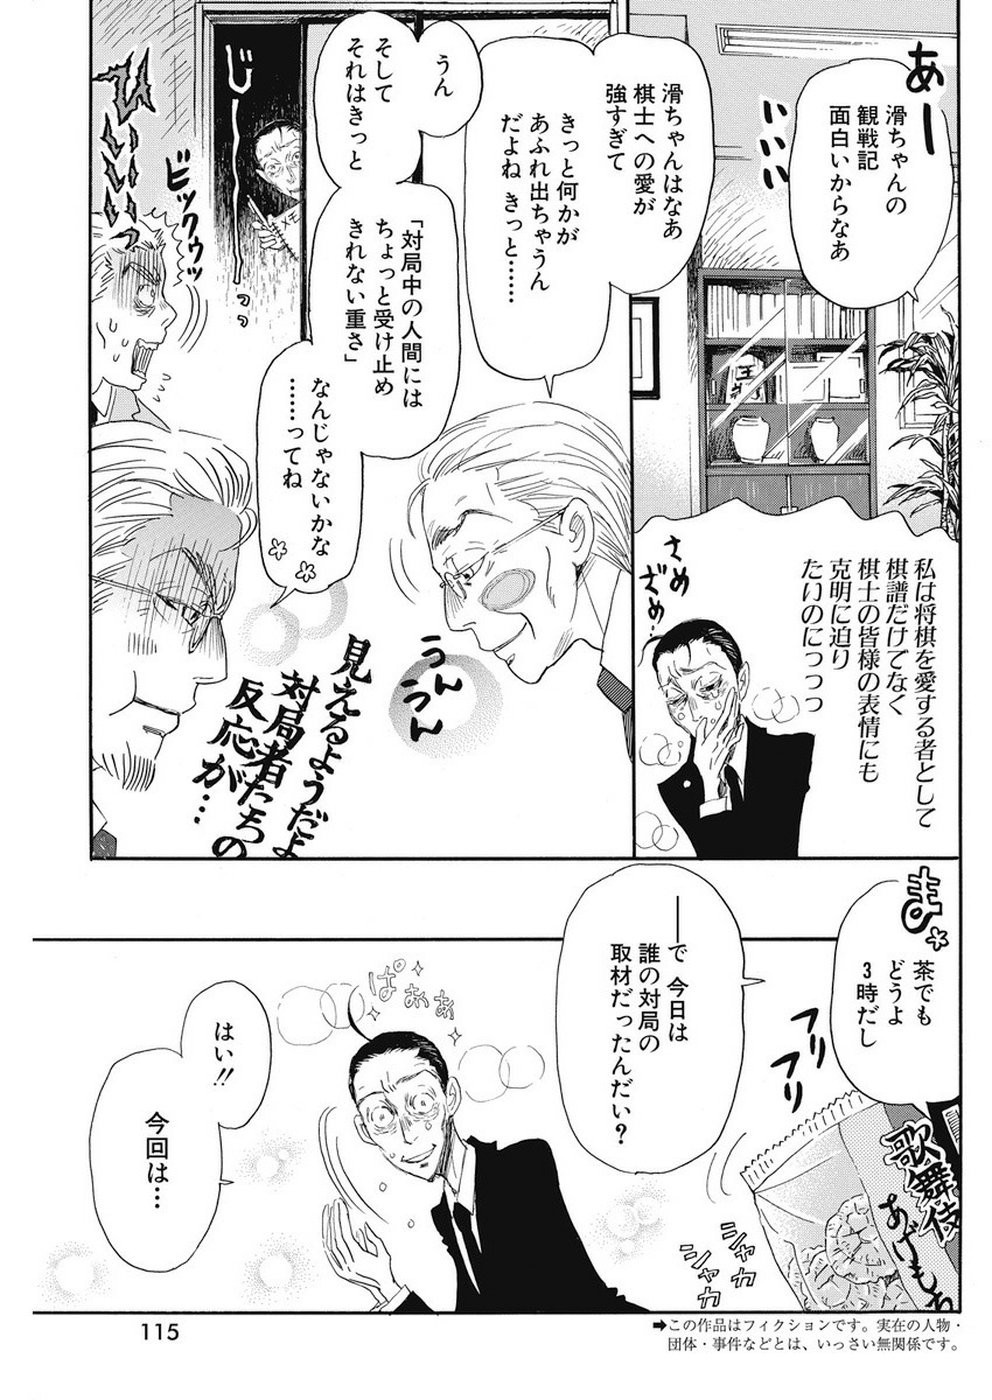 3 Gatsu no Lion - Chapter 162 - Page 3